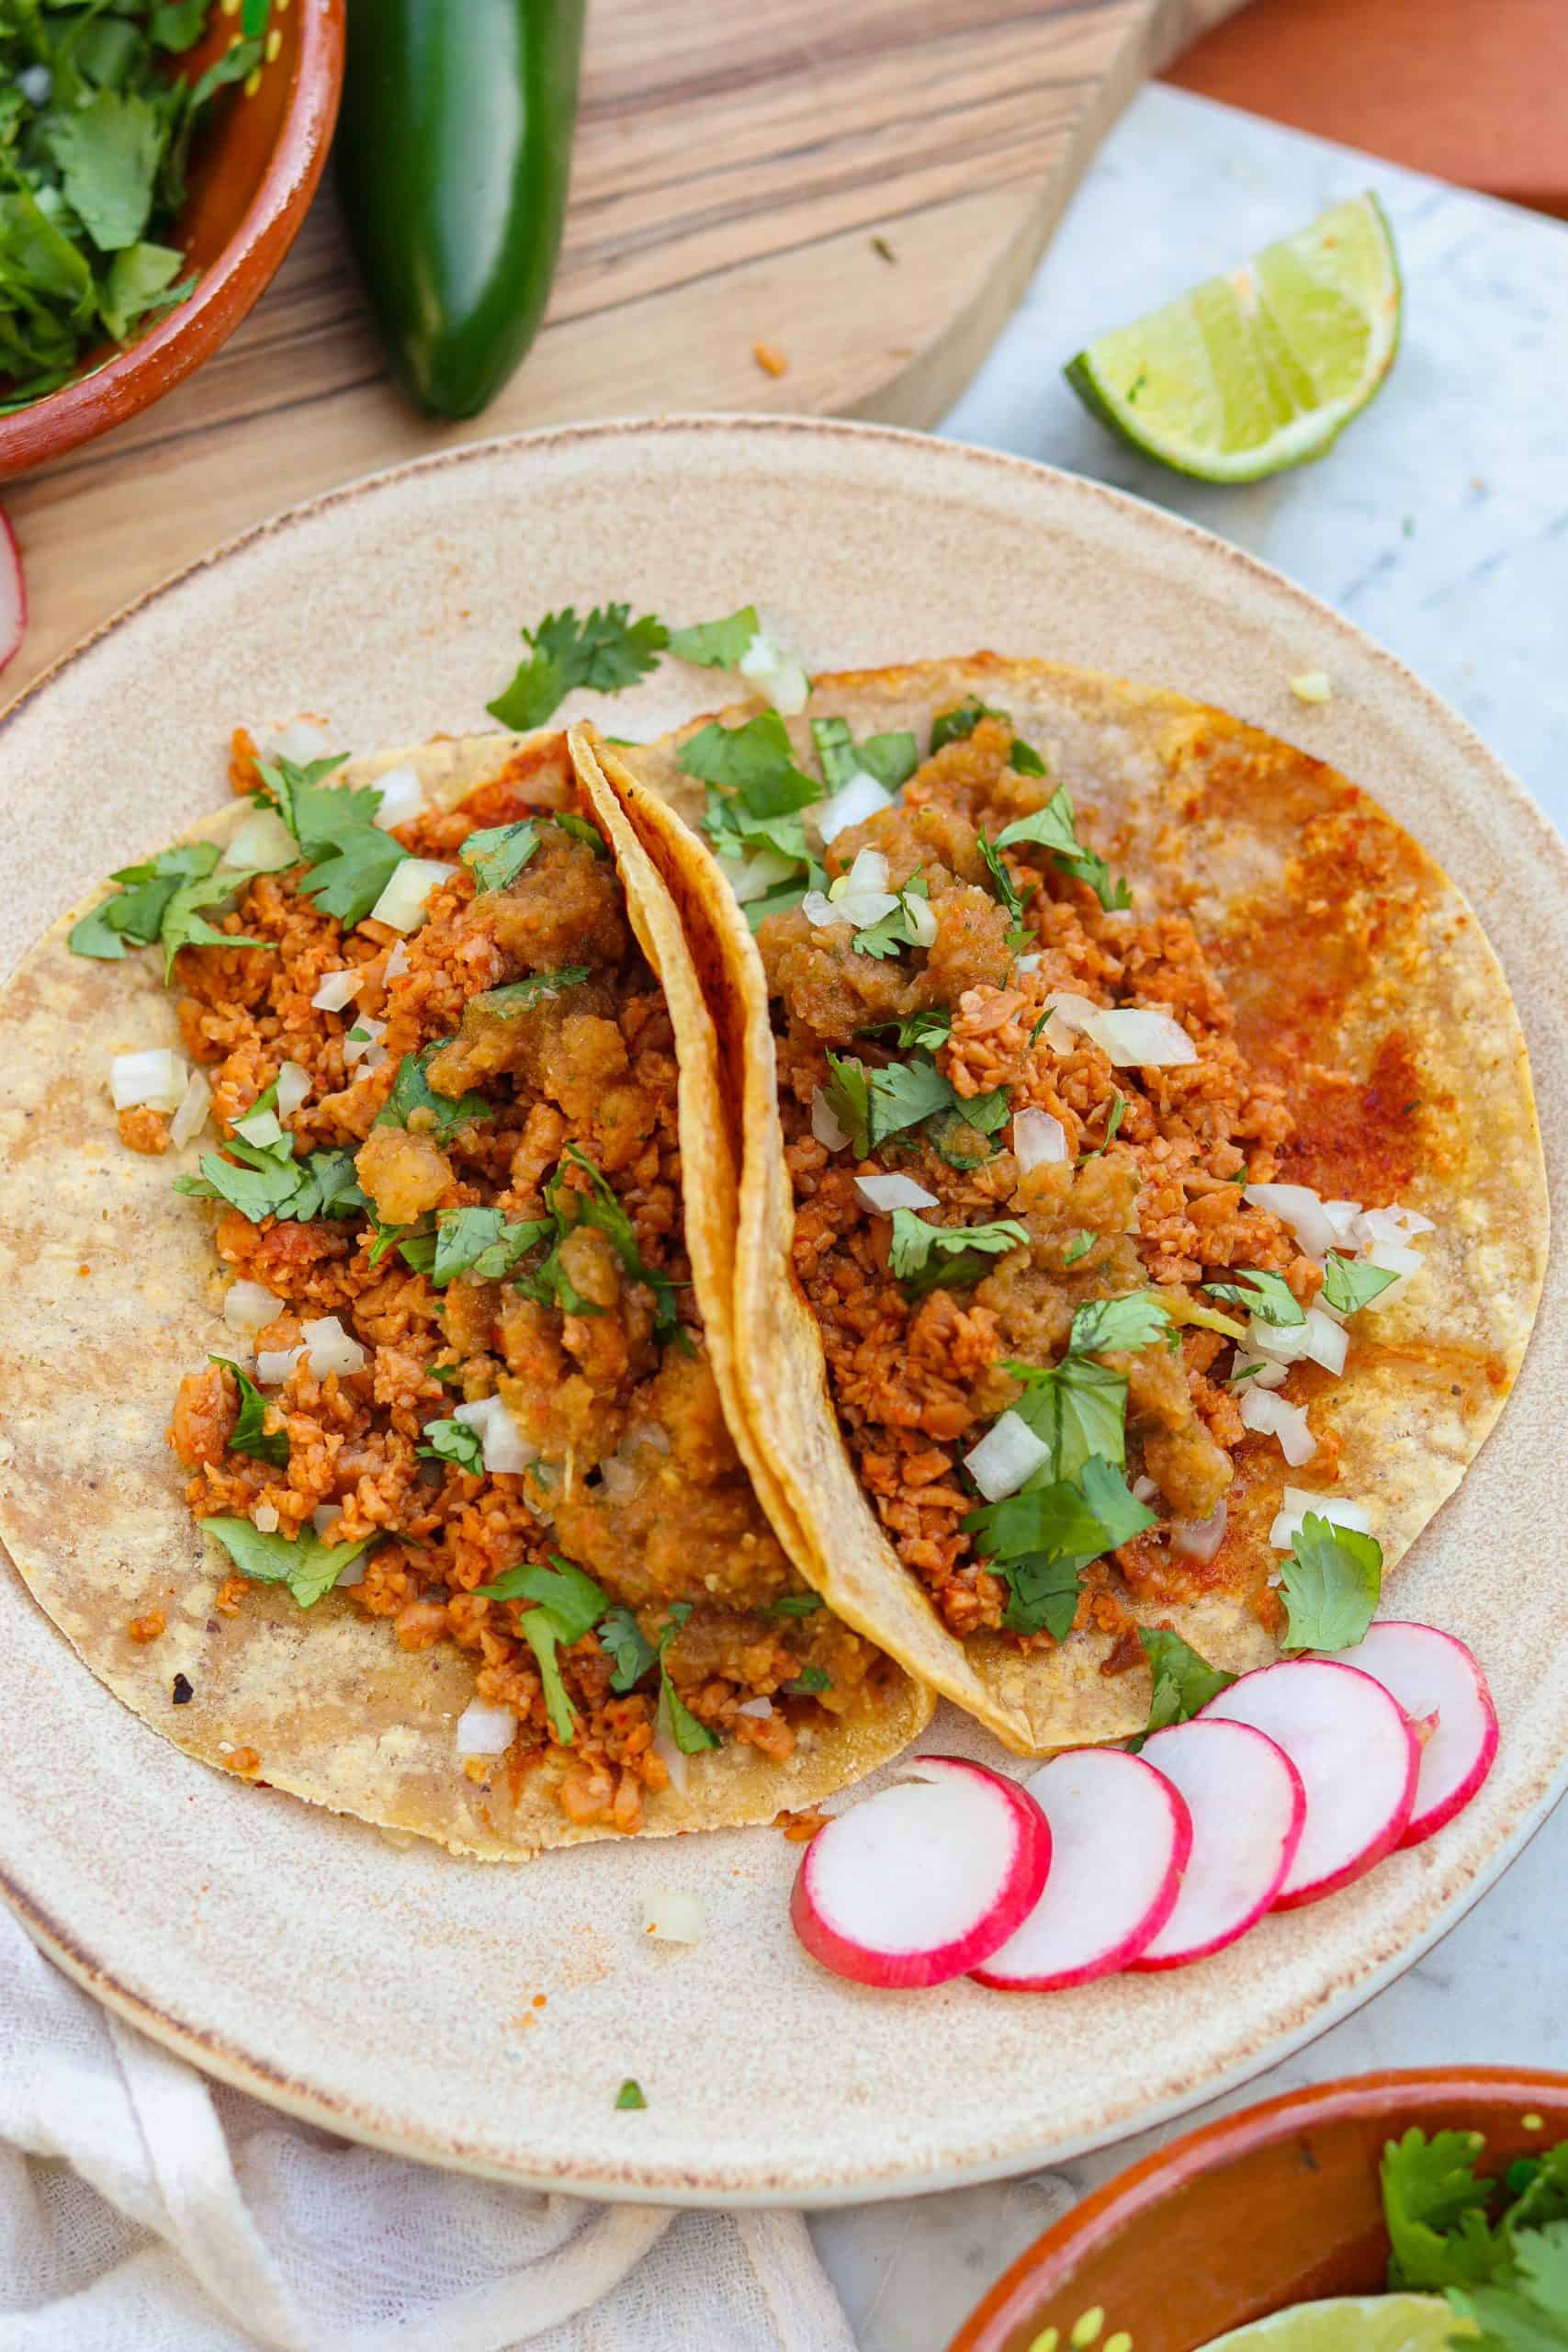 Tacos de Soya (Vegan Street Tacos)